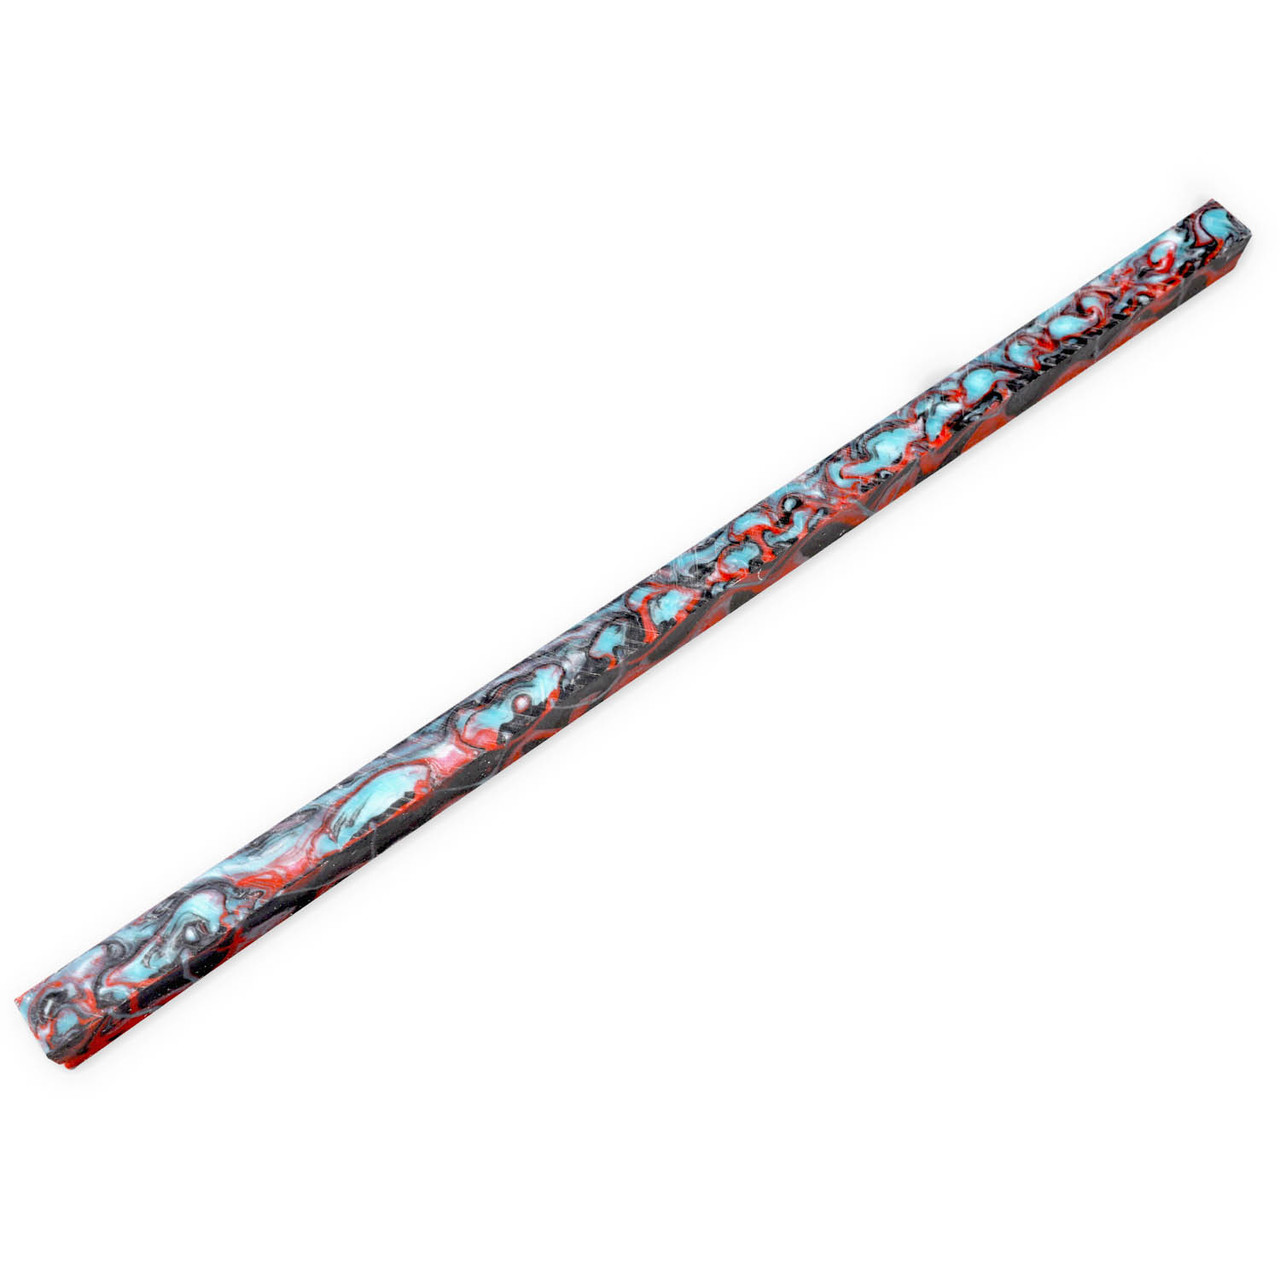 Legacy Premium Resin Pen Blank, Fire & Ice, 19" Long